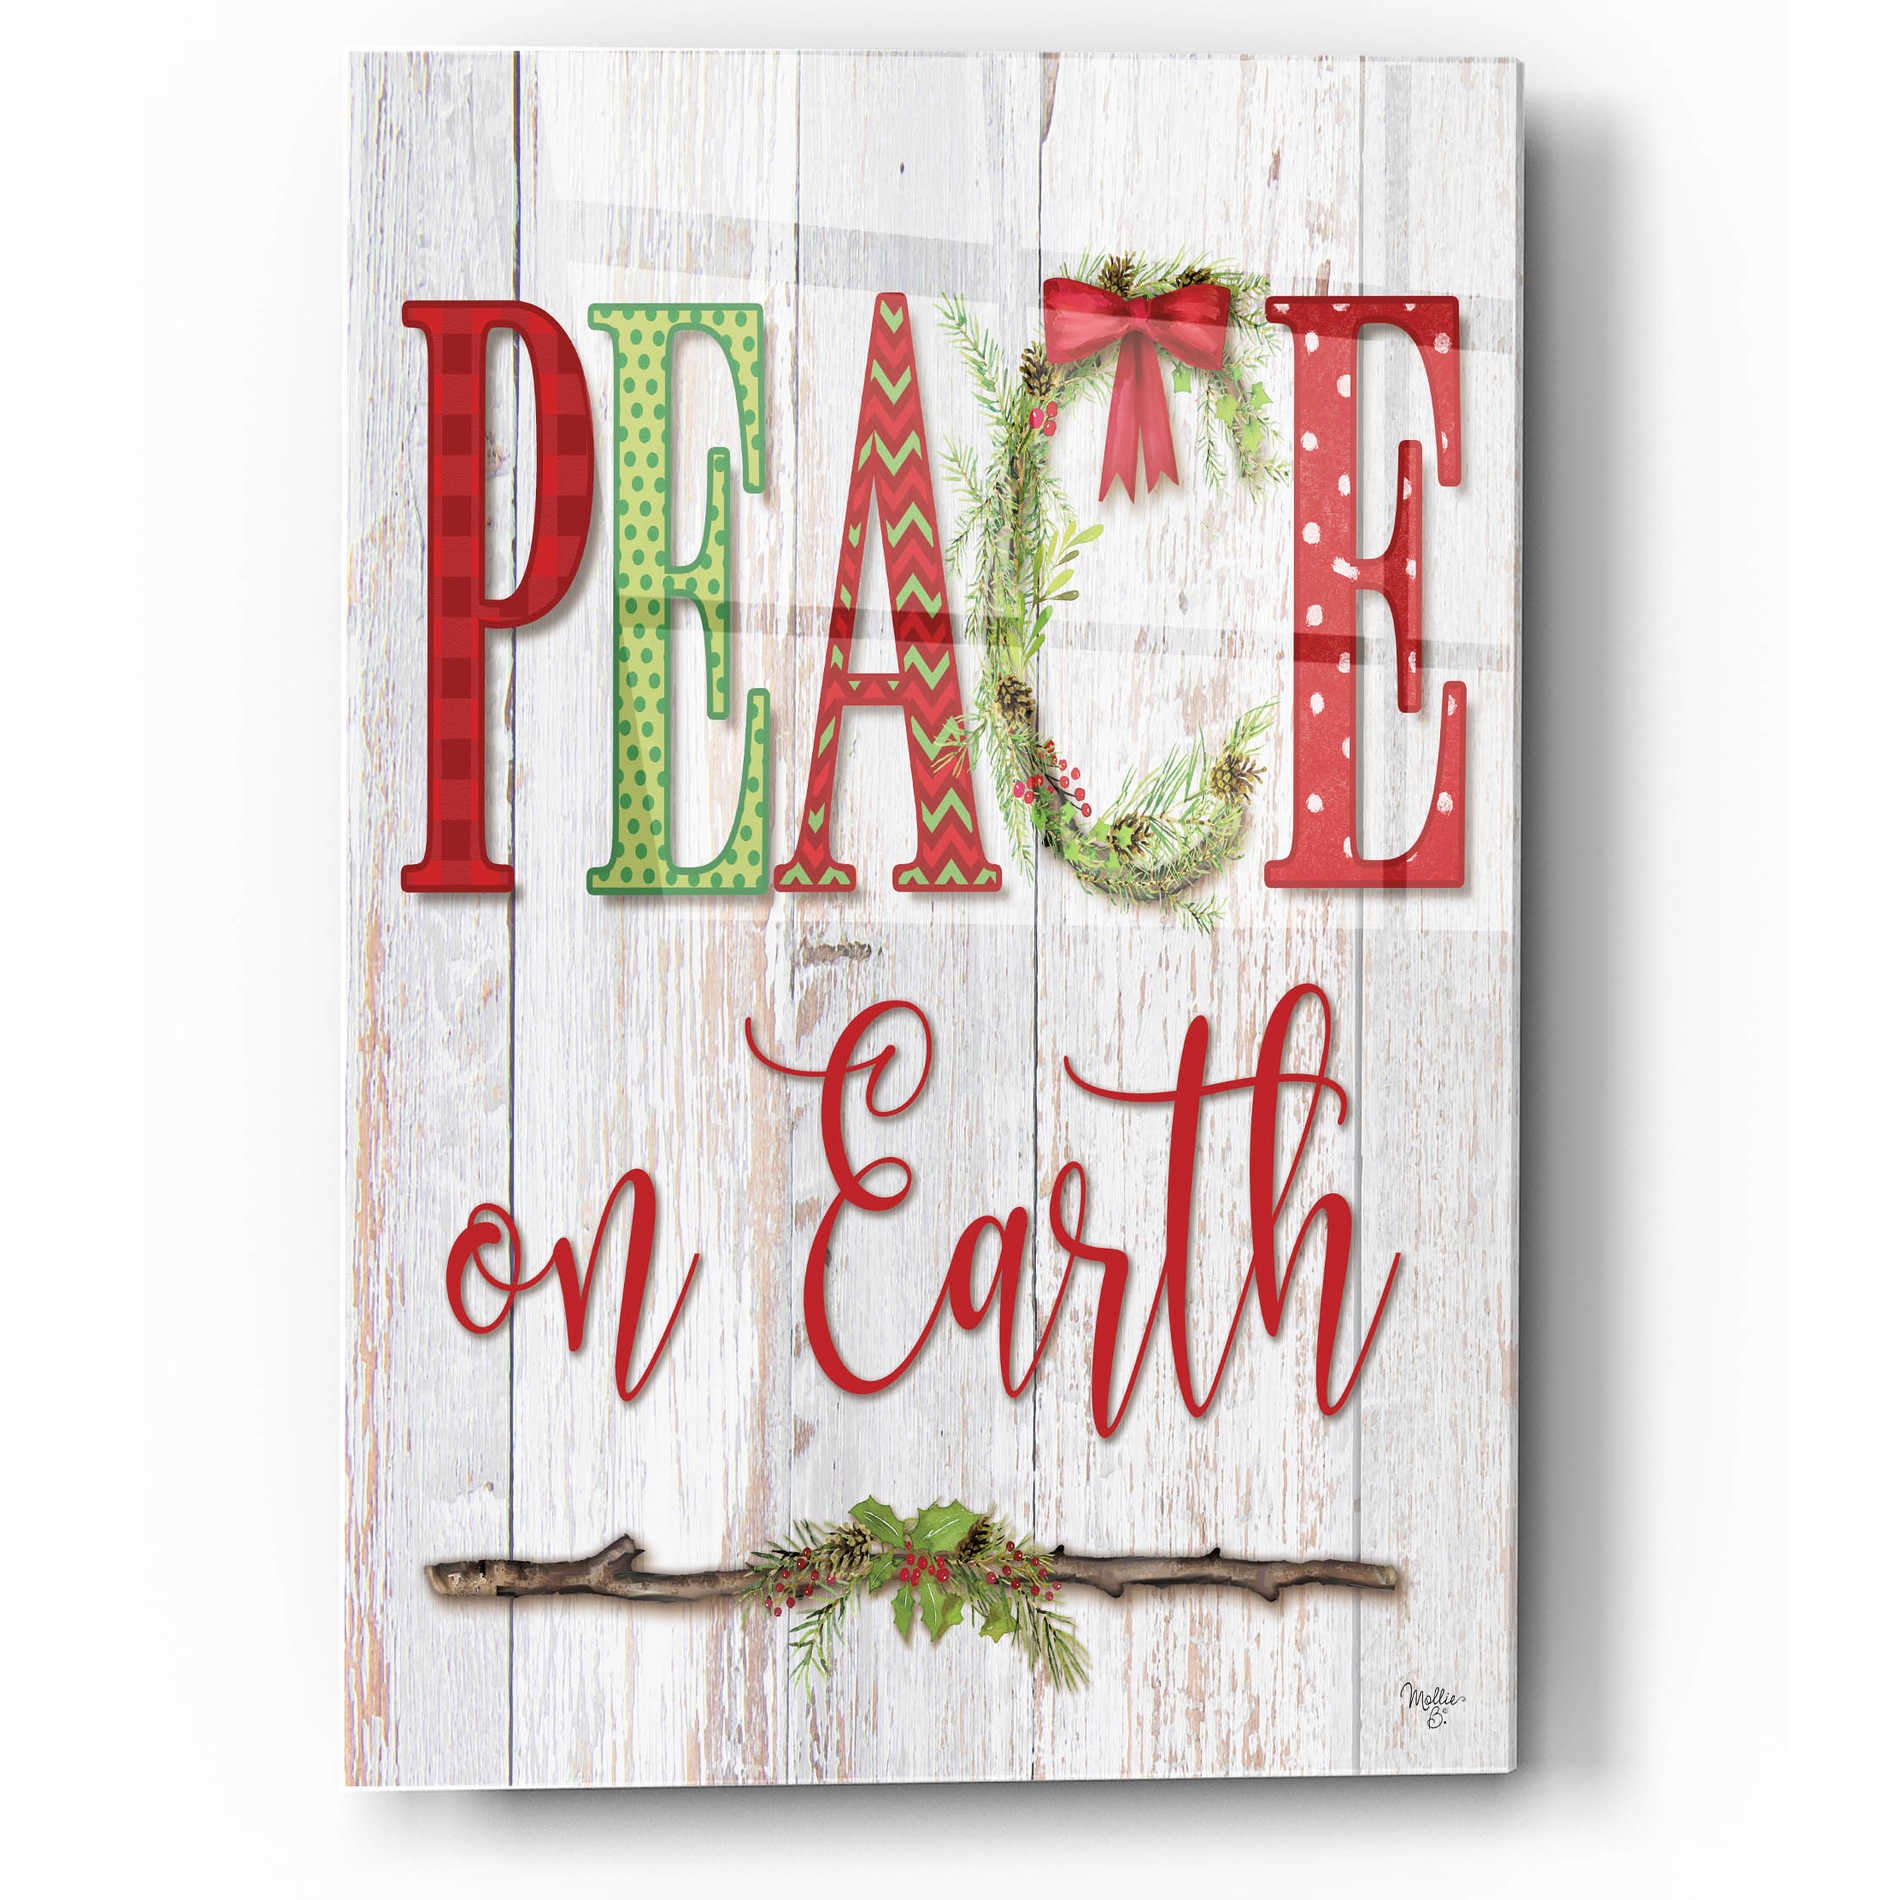 Epic Art 'Peace on Earth' by Mollie B, Acrylic Glass Wall Art,12x16